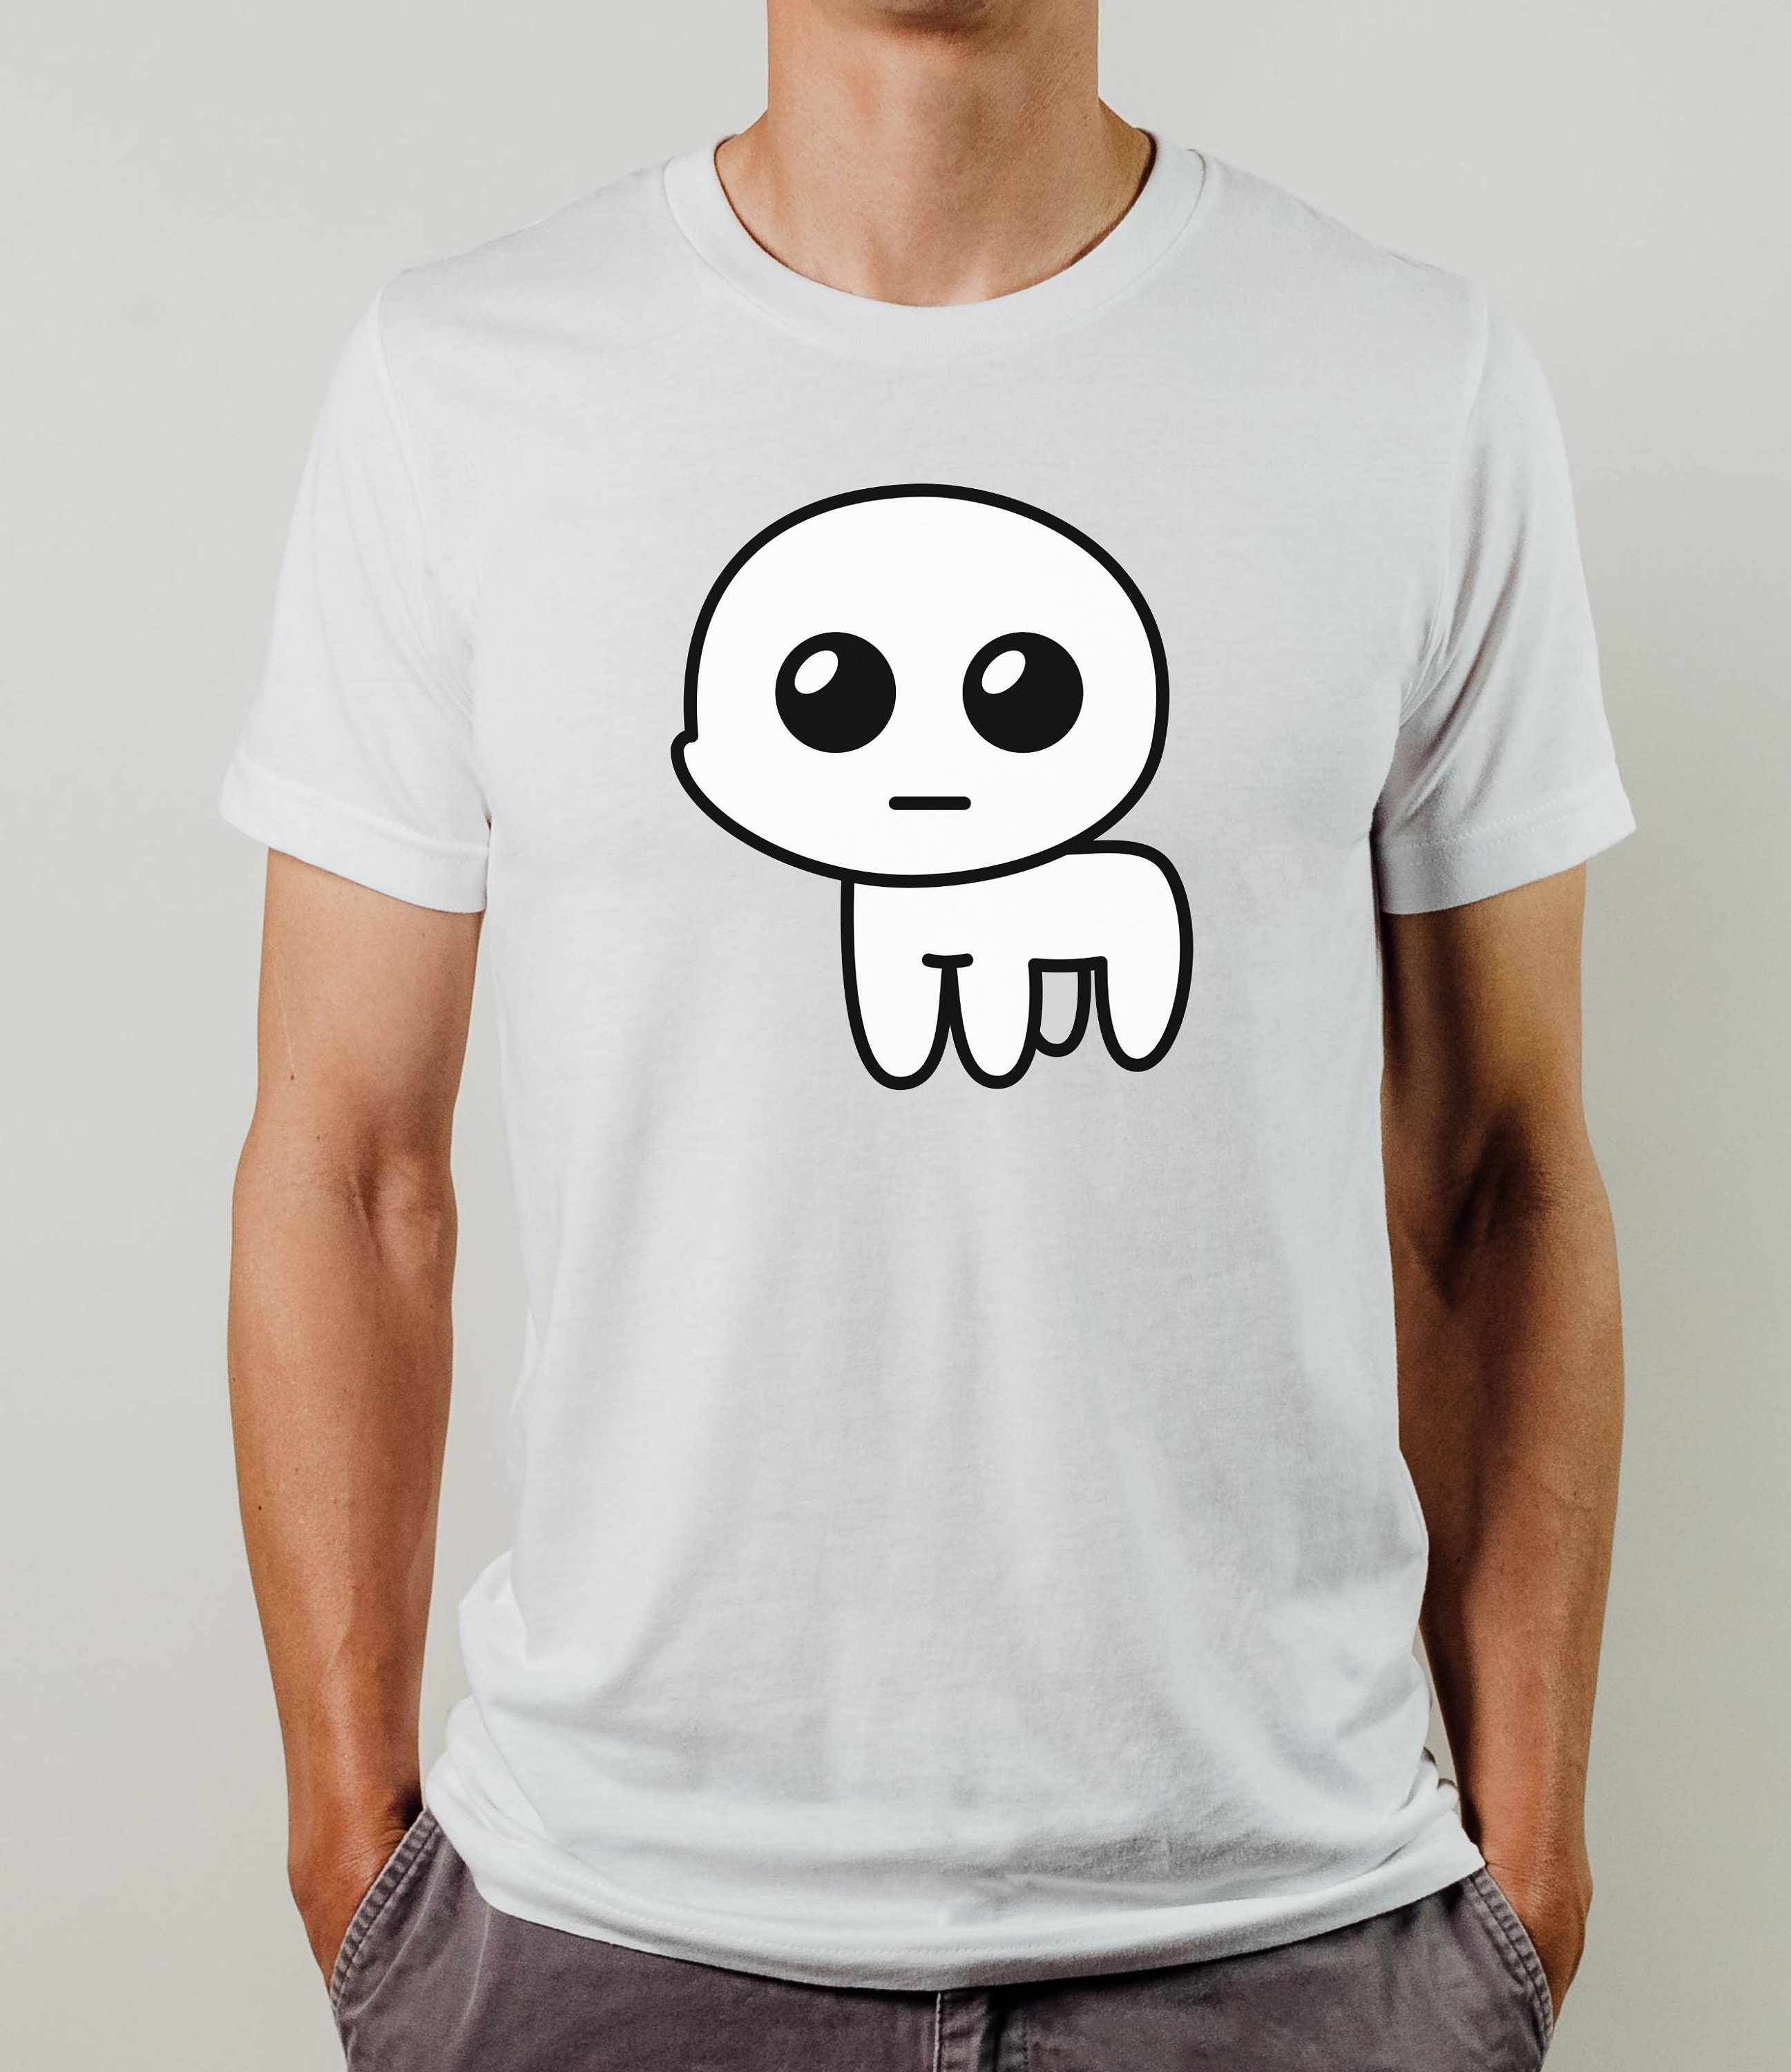 Tbh Creature Funny Unisex T-Shirt - Teeruto